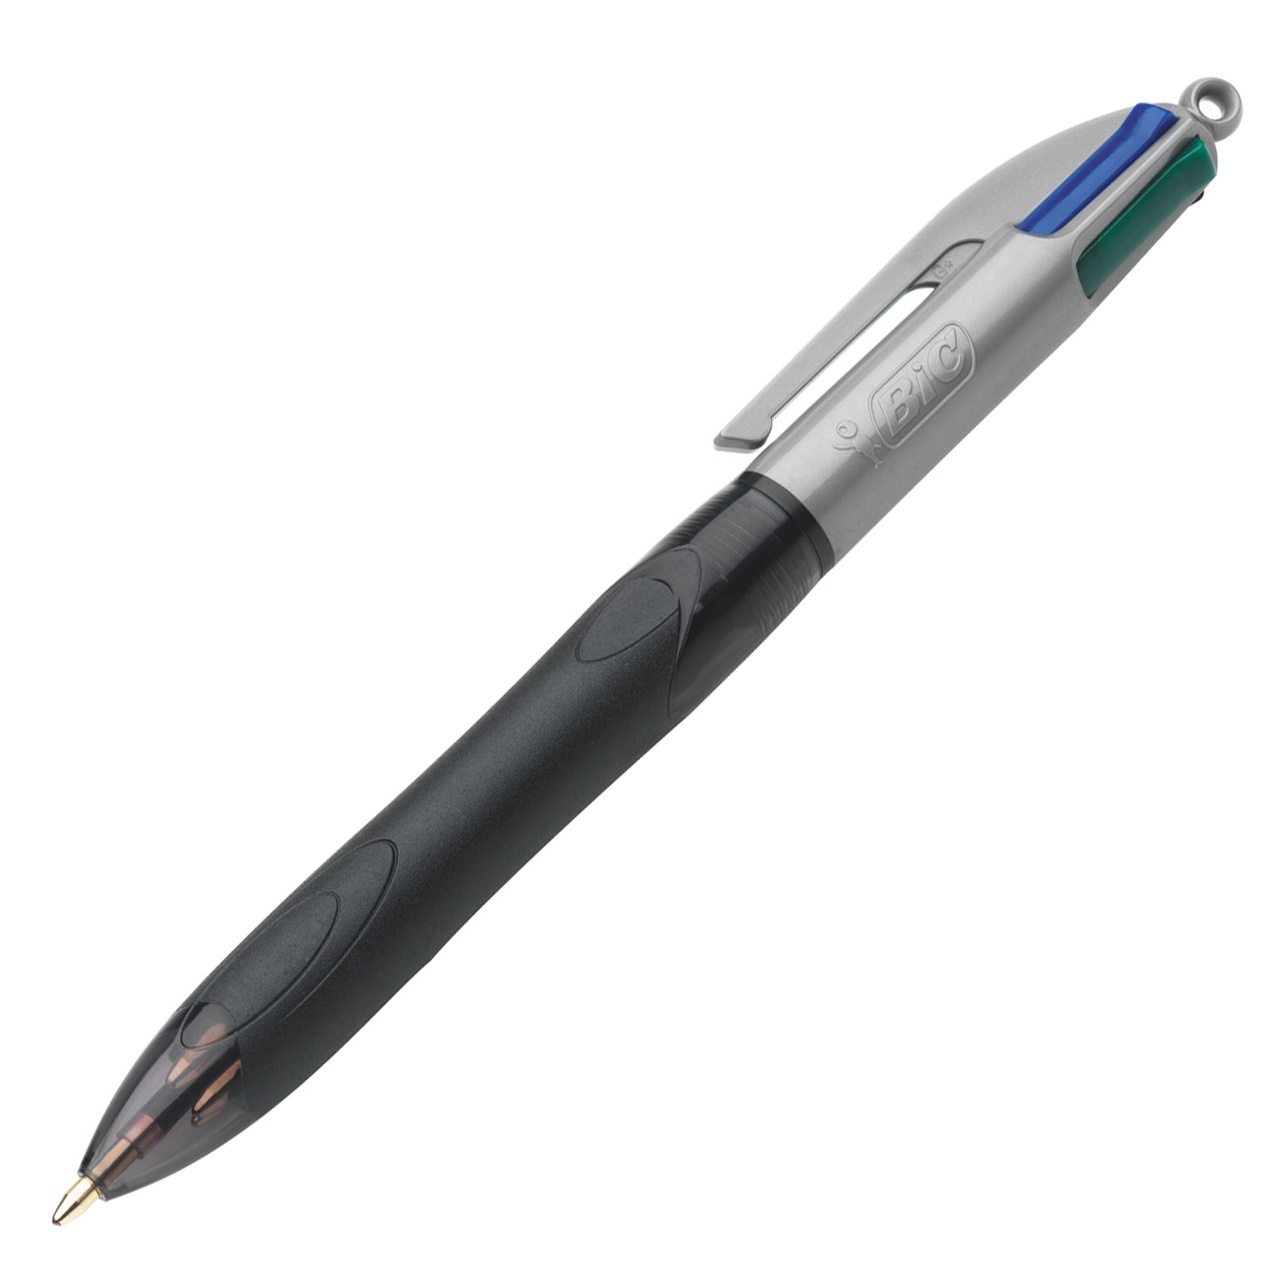 BIC Grip 4 Color Ball Pens with 3 Color + Pencil Set, 10-count